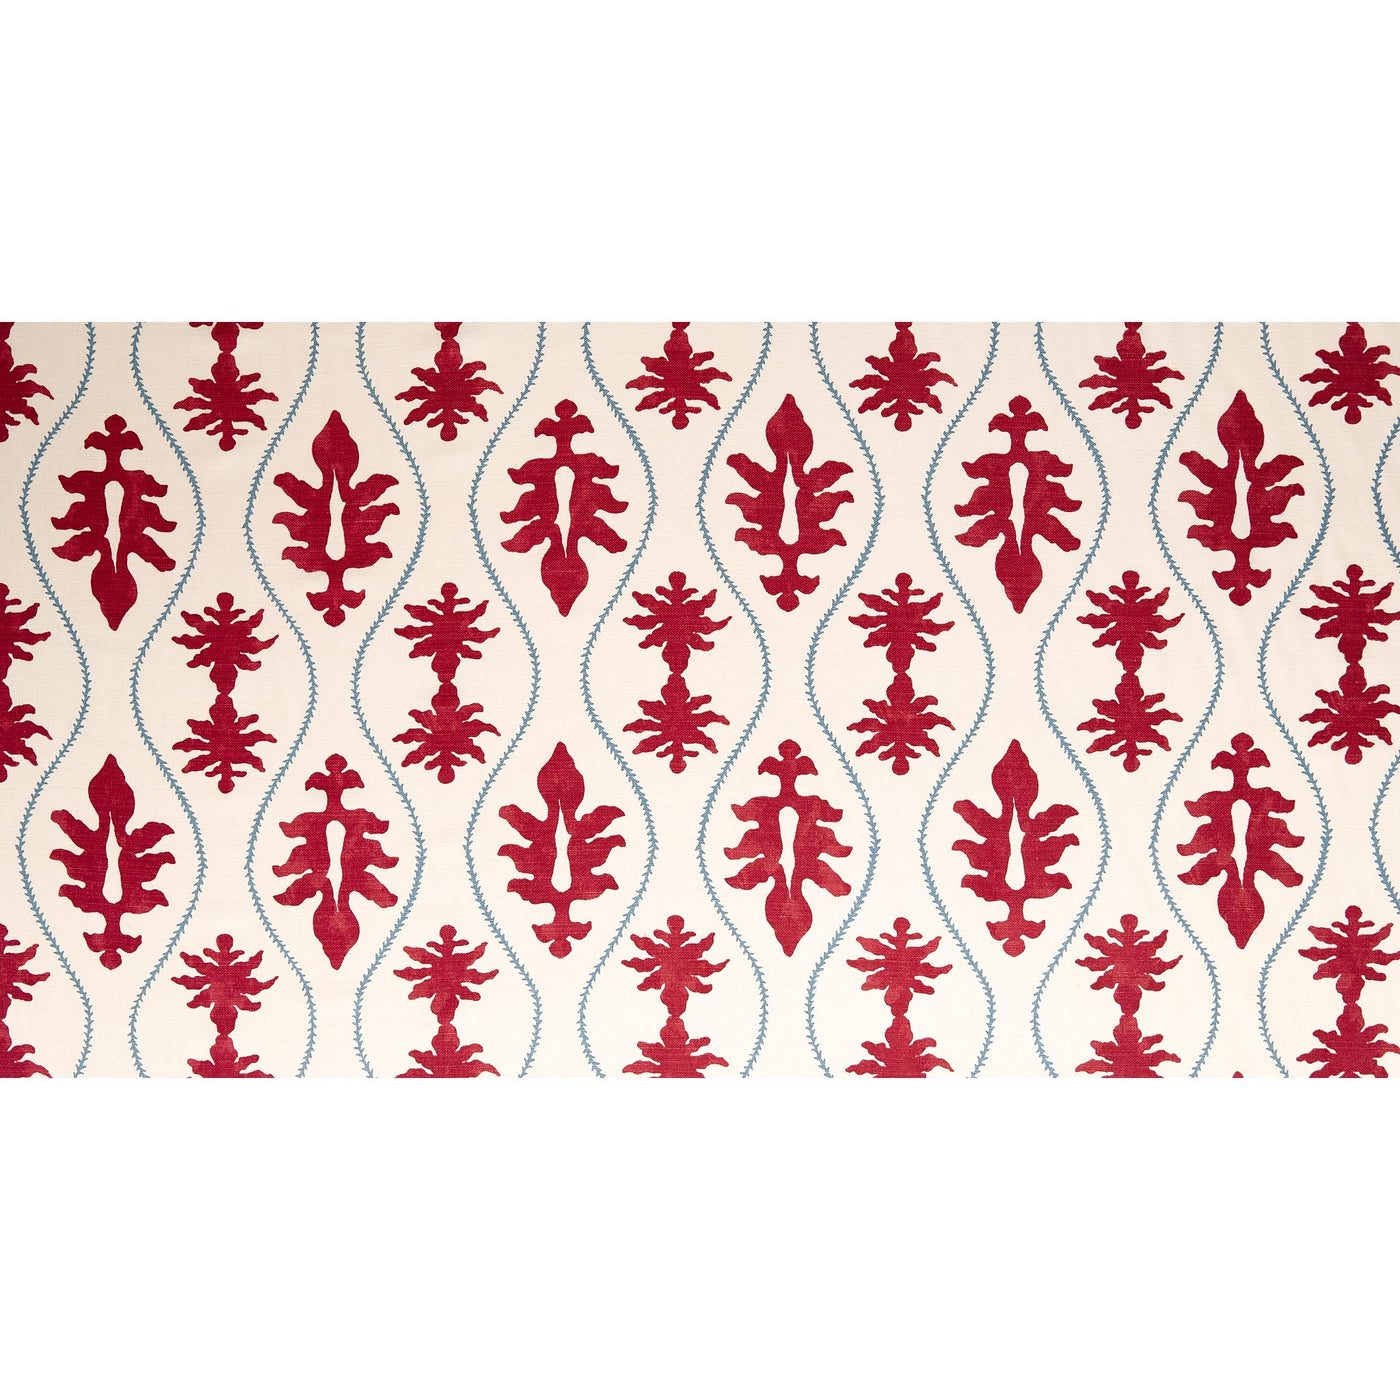 Great Jones Fabric in Raspberry